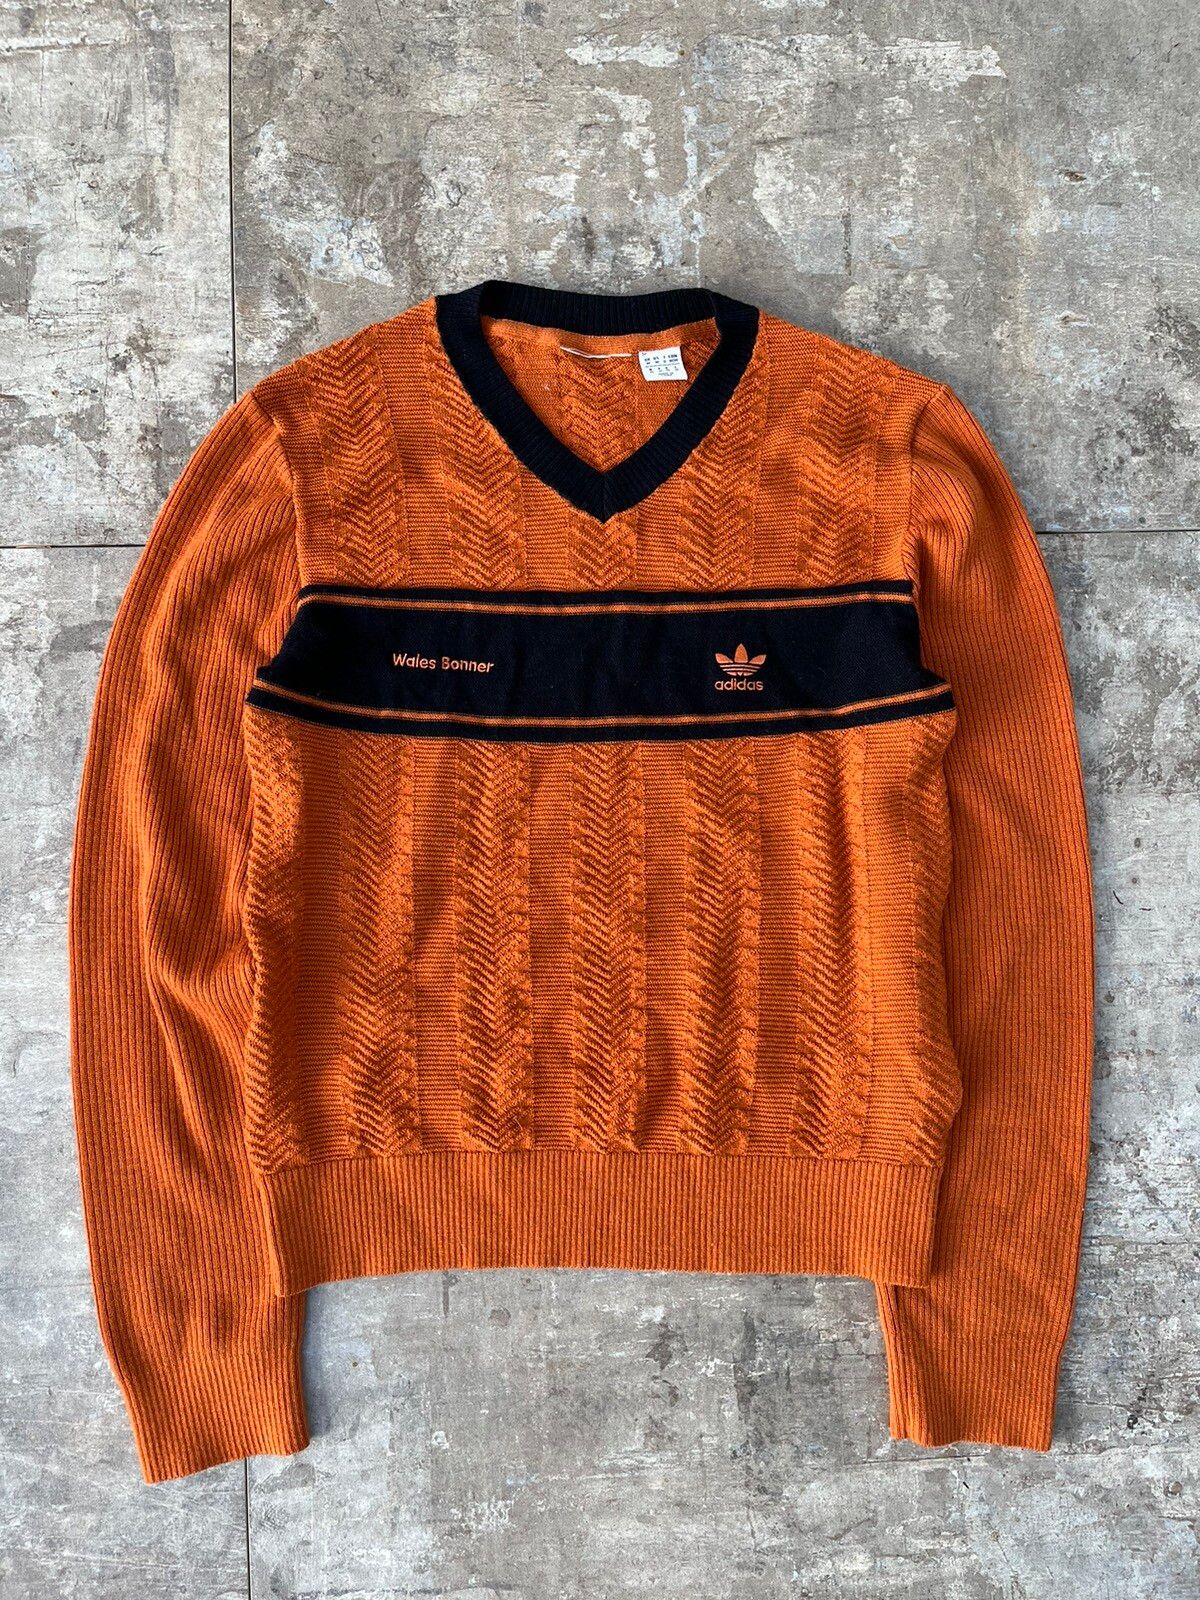 Adidas Adidas Wales Bonner Knit Sweater Size US M / EU 48-50 / 2 - 1 Preview